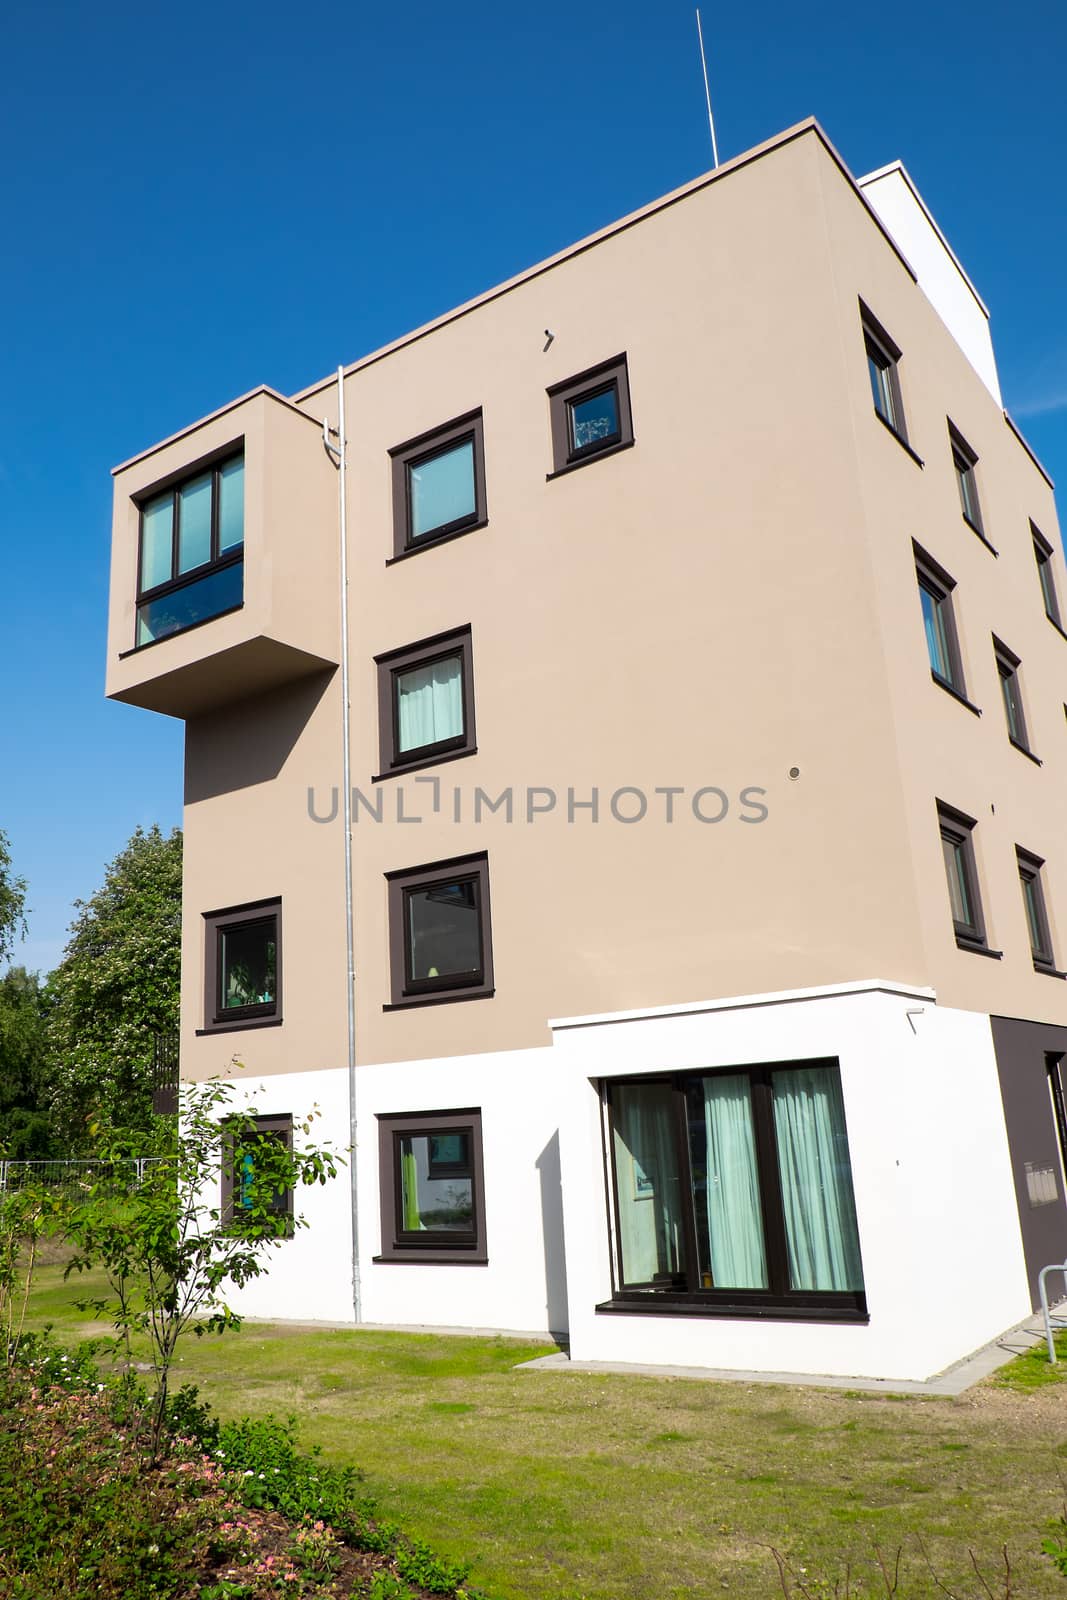 A modern apartment house seen in Hamburg, Germany